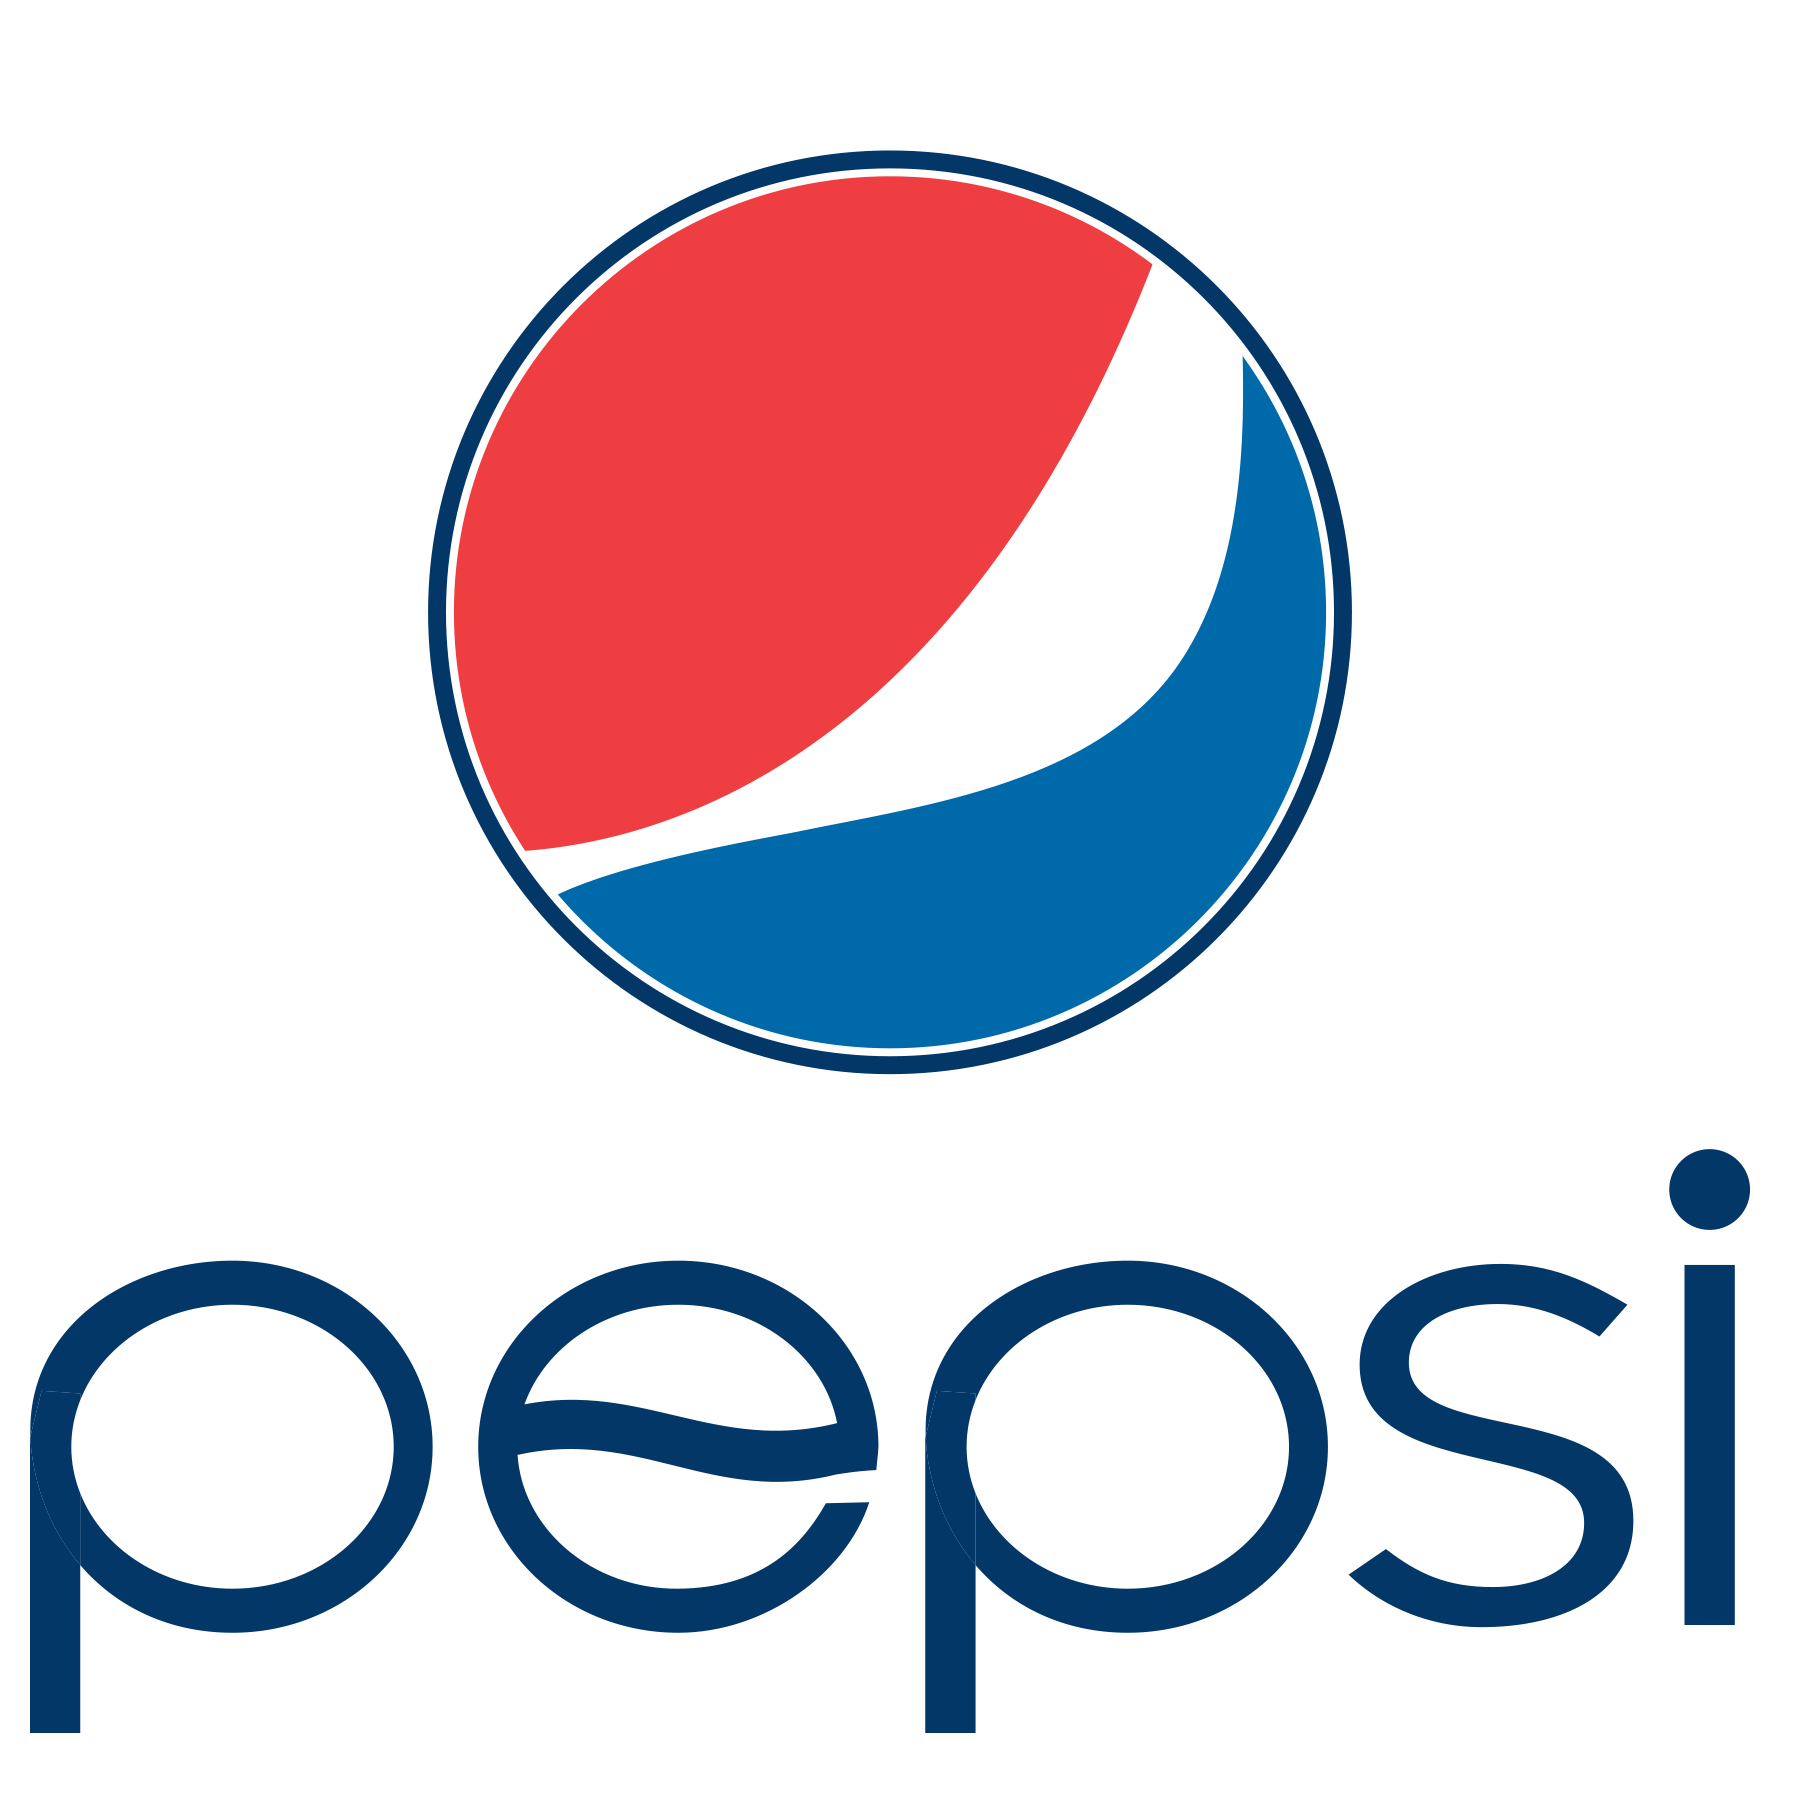 kisspng-pepsi-globe-coca-cola-logo-portable-network-graphi-5c5369cdd7d8b6.2995682815489704458841 Powerman Arizona